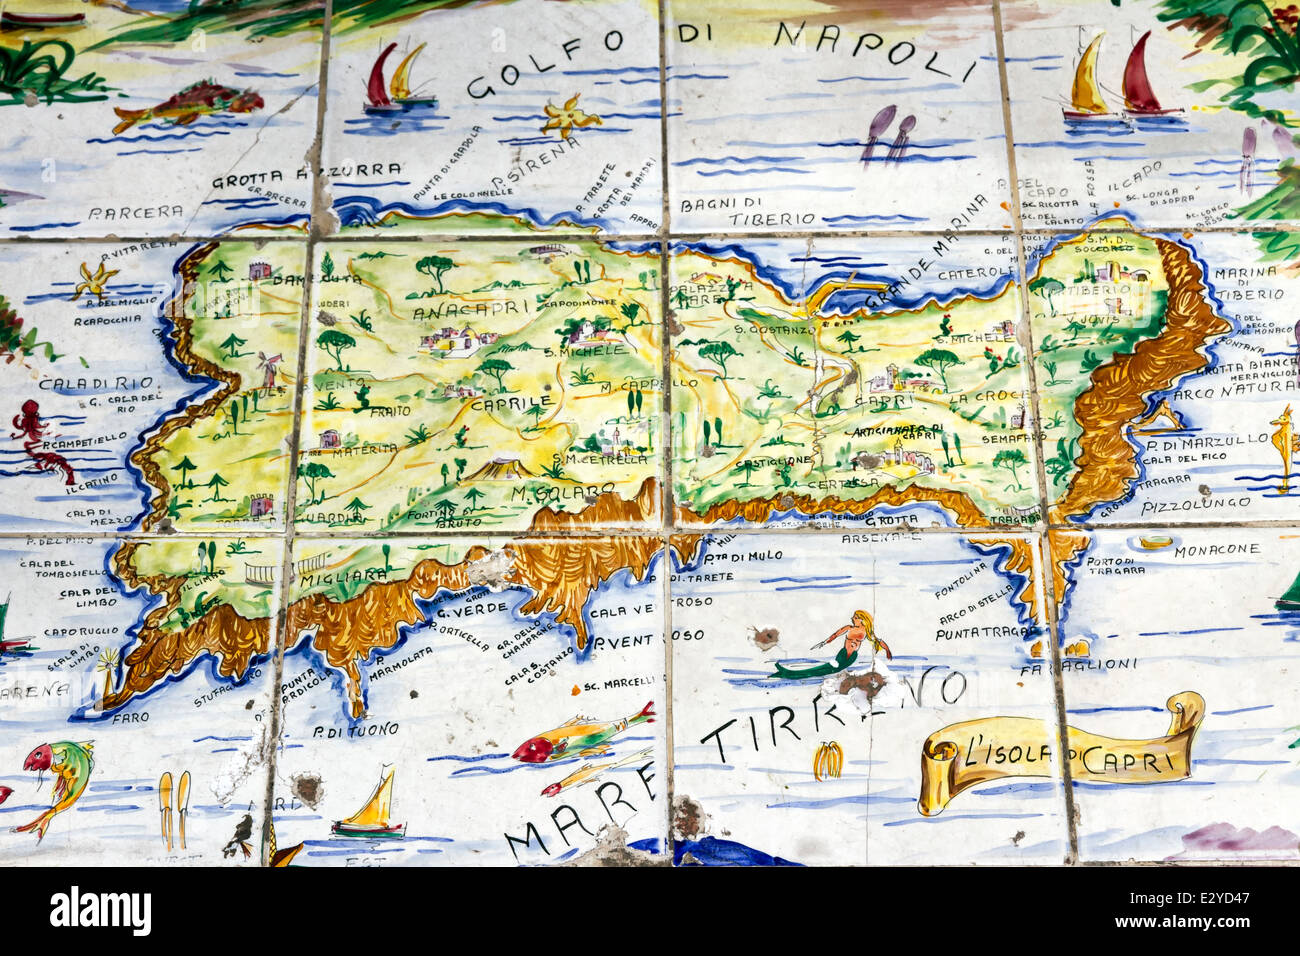 Capri map -Fotos und -Bildmaterial in hoher Auflösung – Alamy